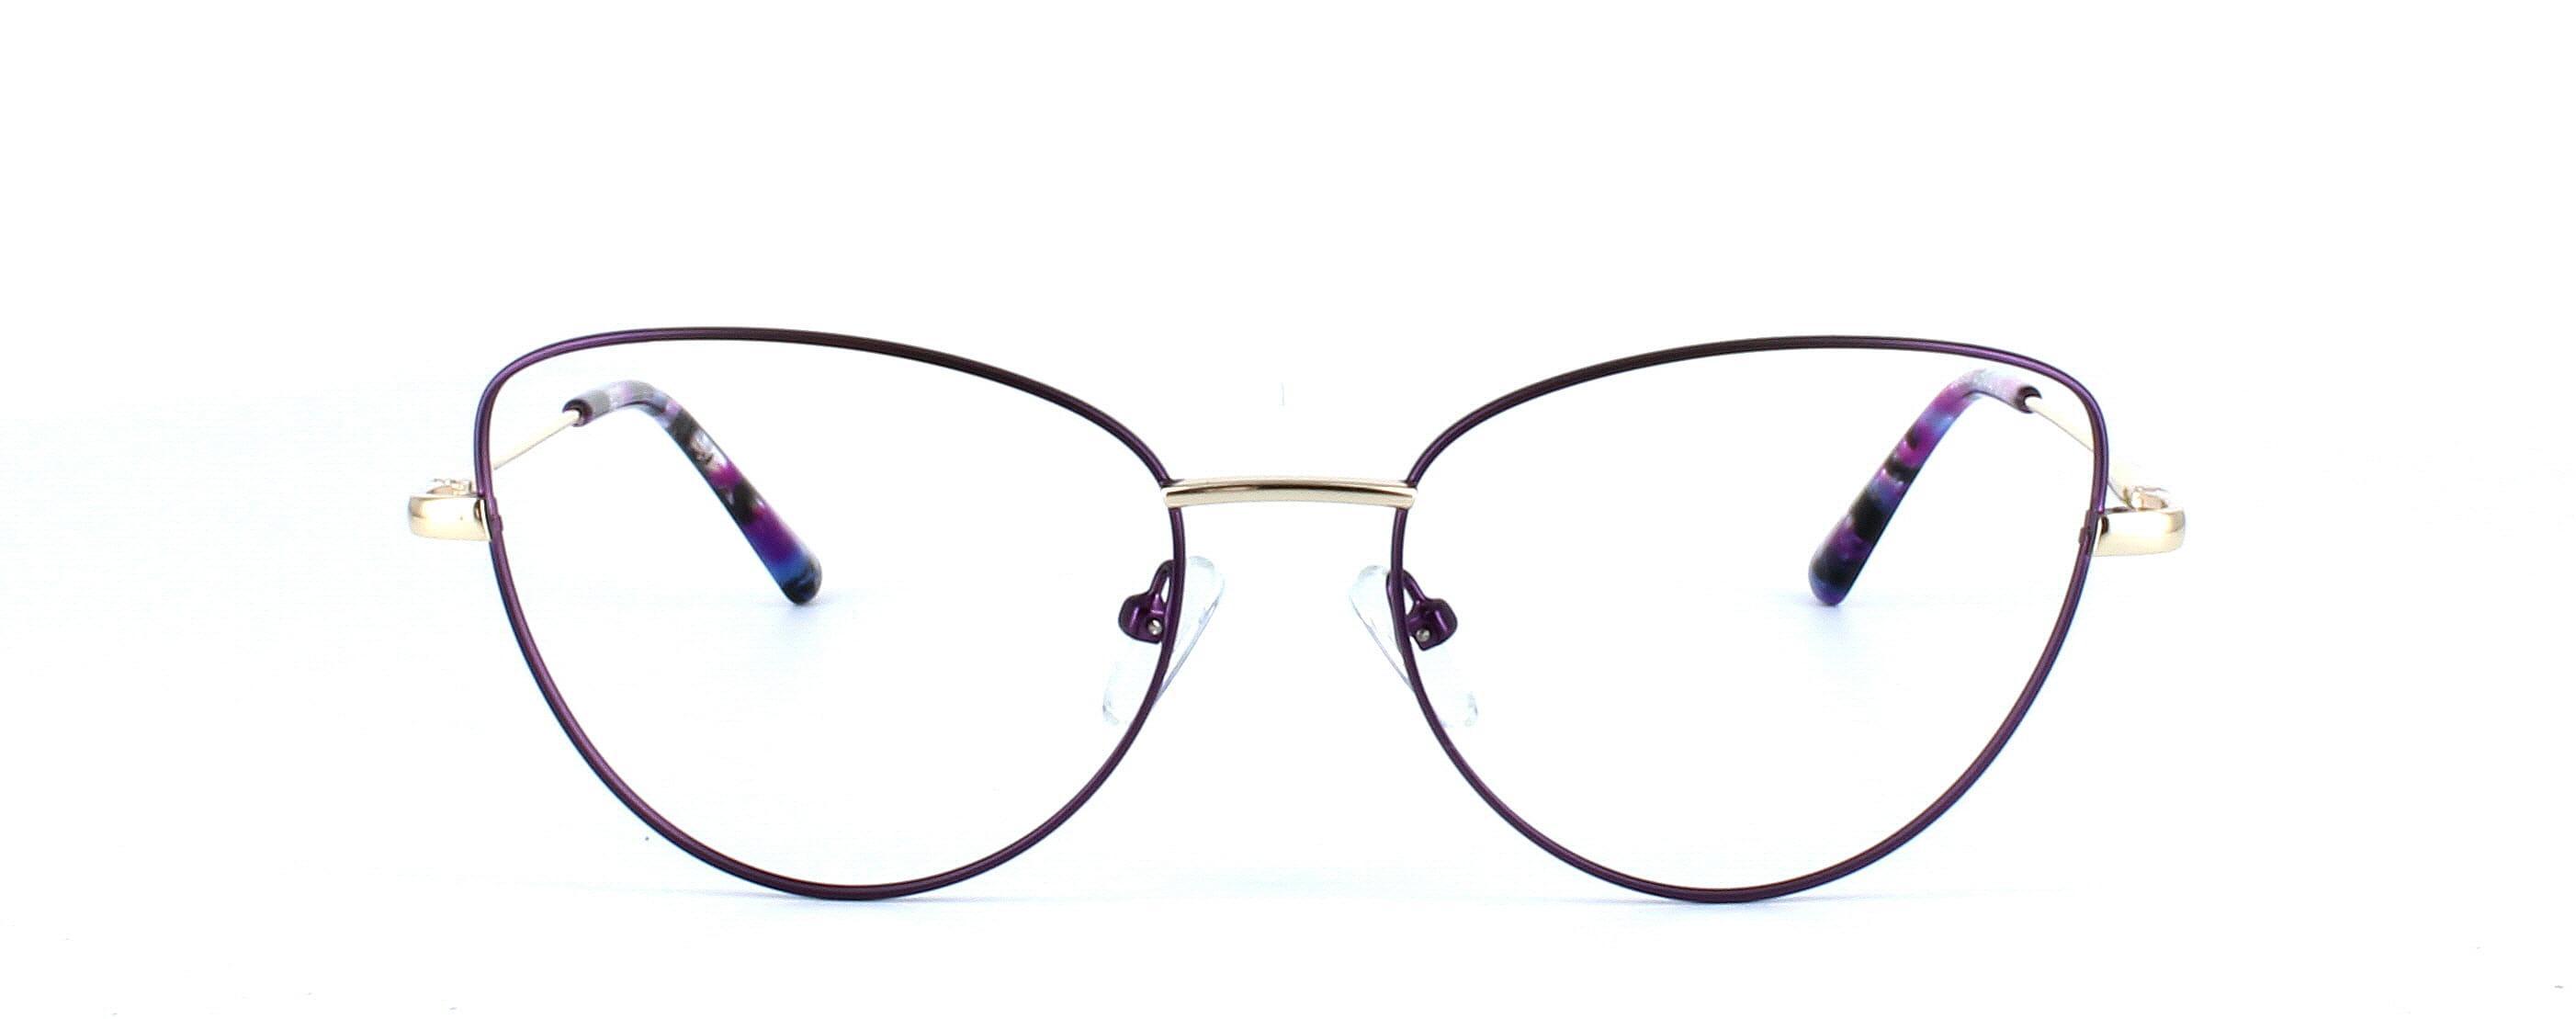 Ladies cat eye 2-tone metal glasses frame - image view 5